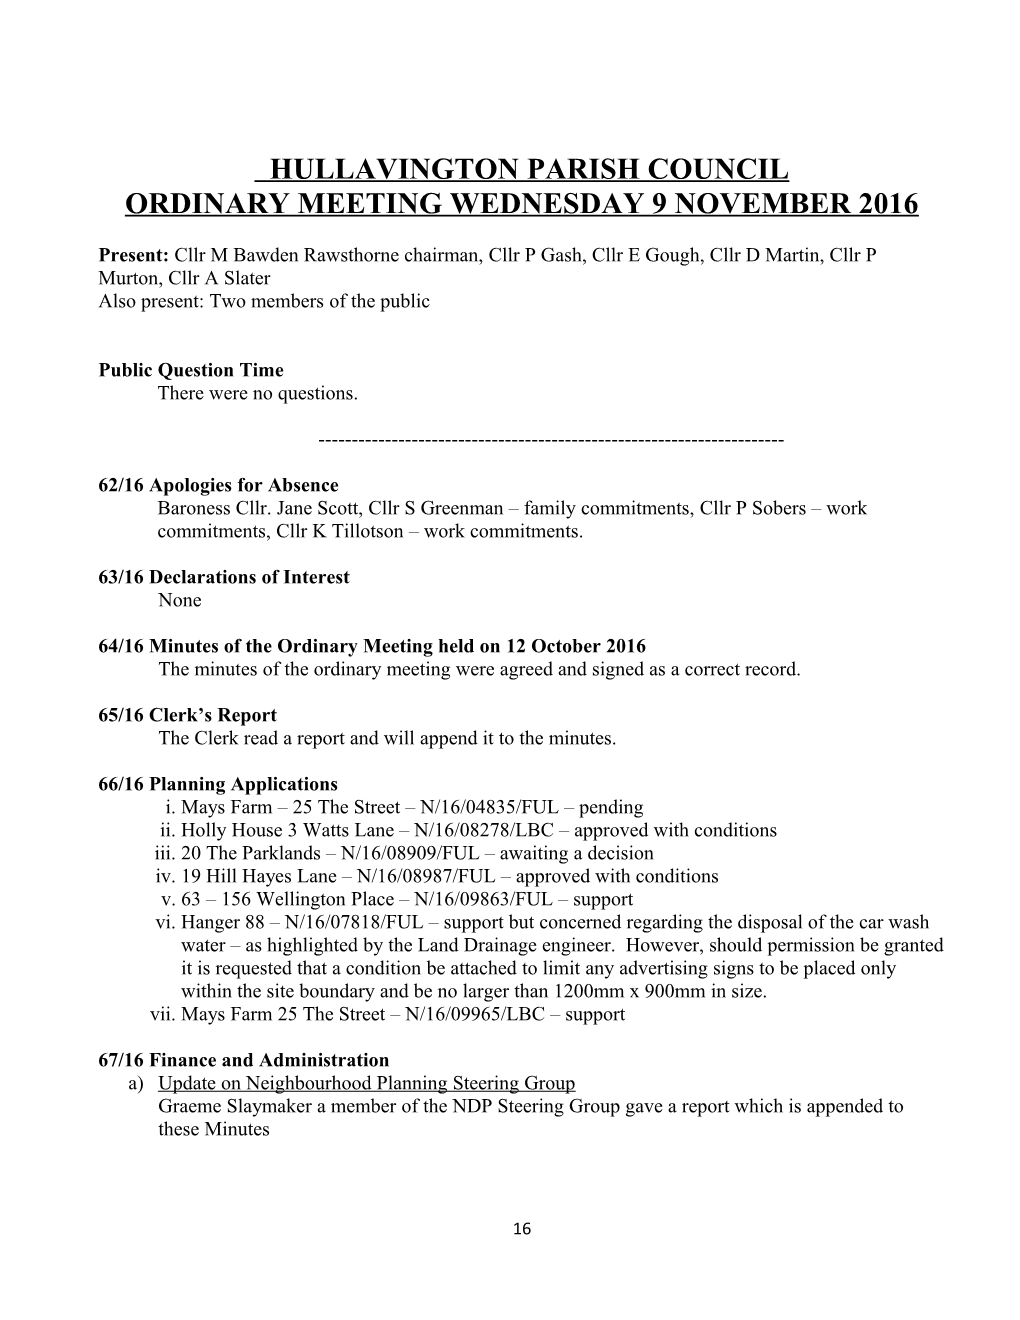 Ordinary Meeting Wednesday 9 November 2016